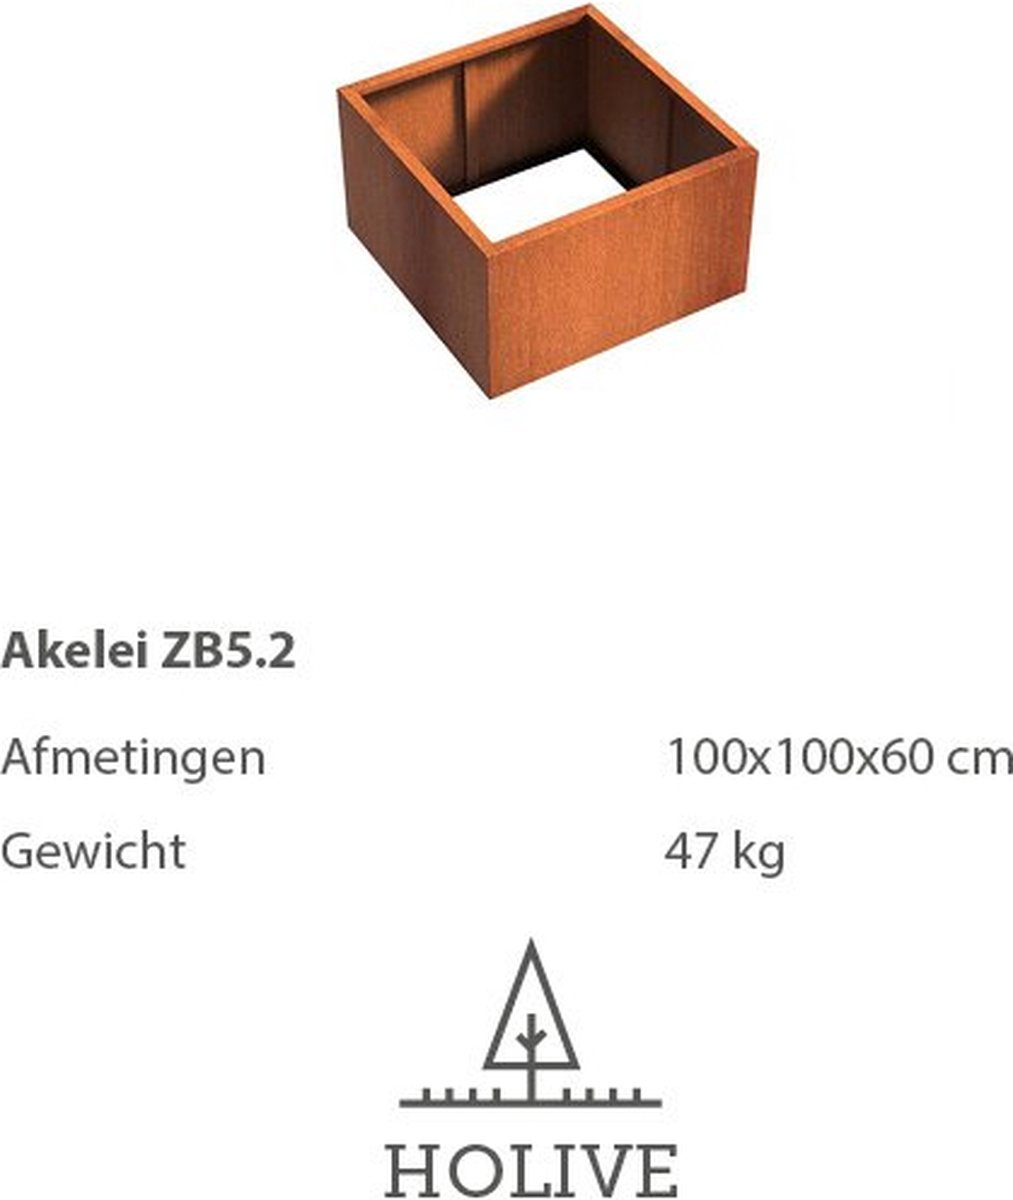 Cortenstaal Akelei ZB5.2 Vierkant zonder bodem 100x100x60 cm. Plantenbak